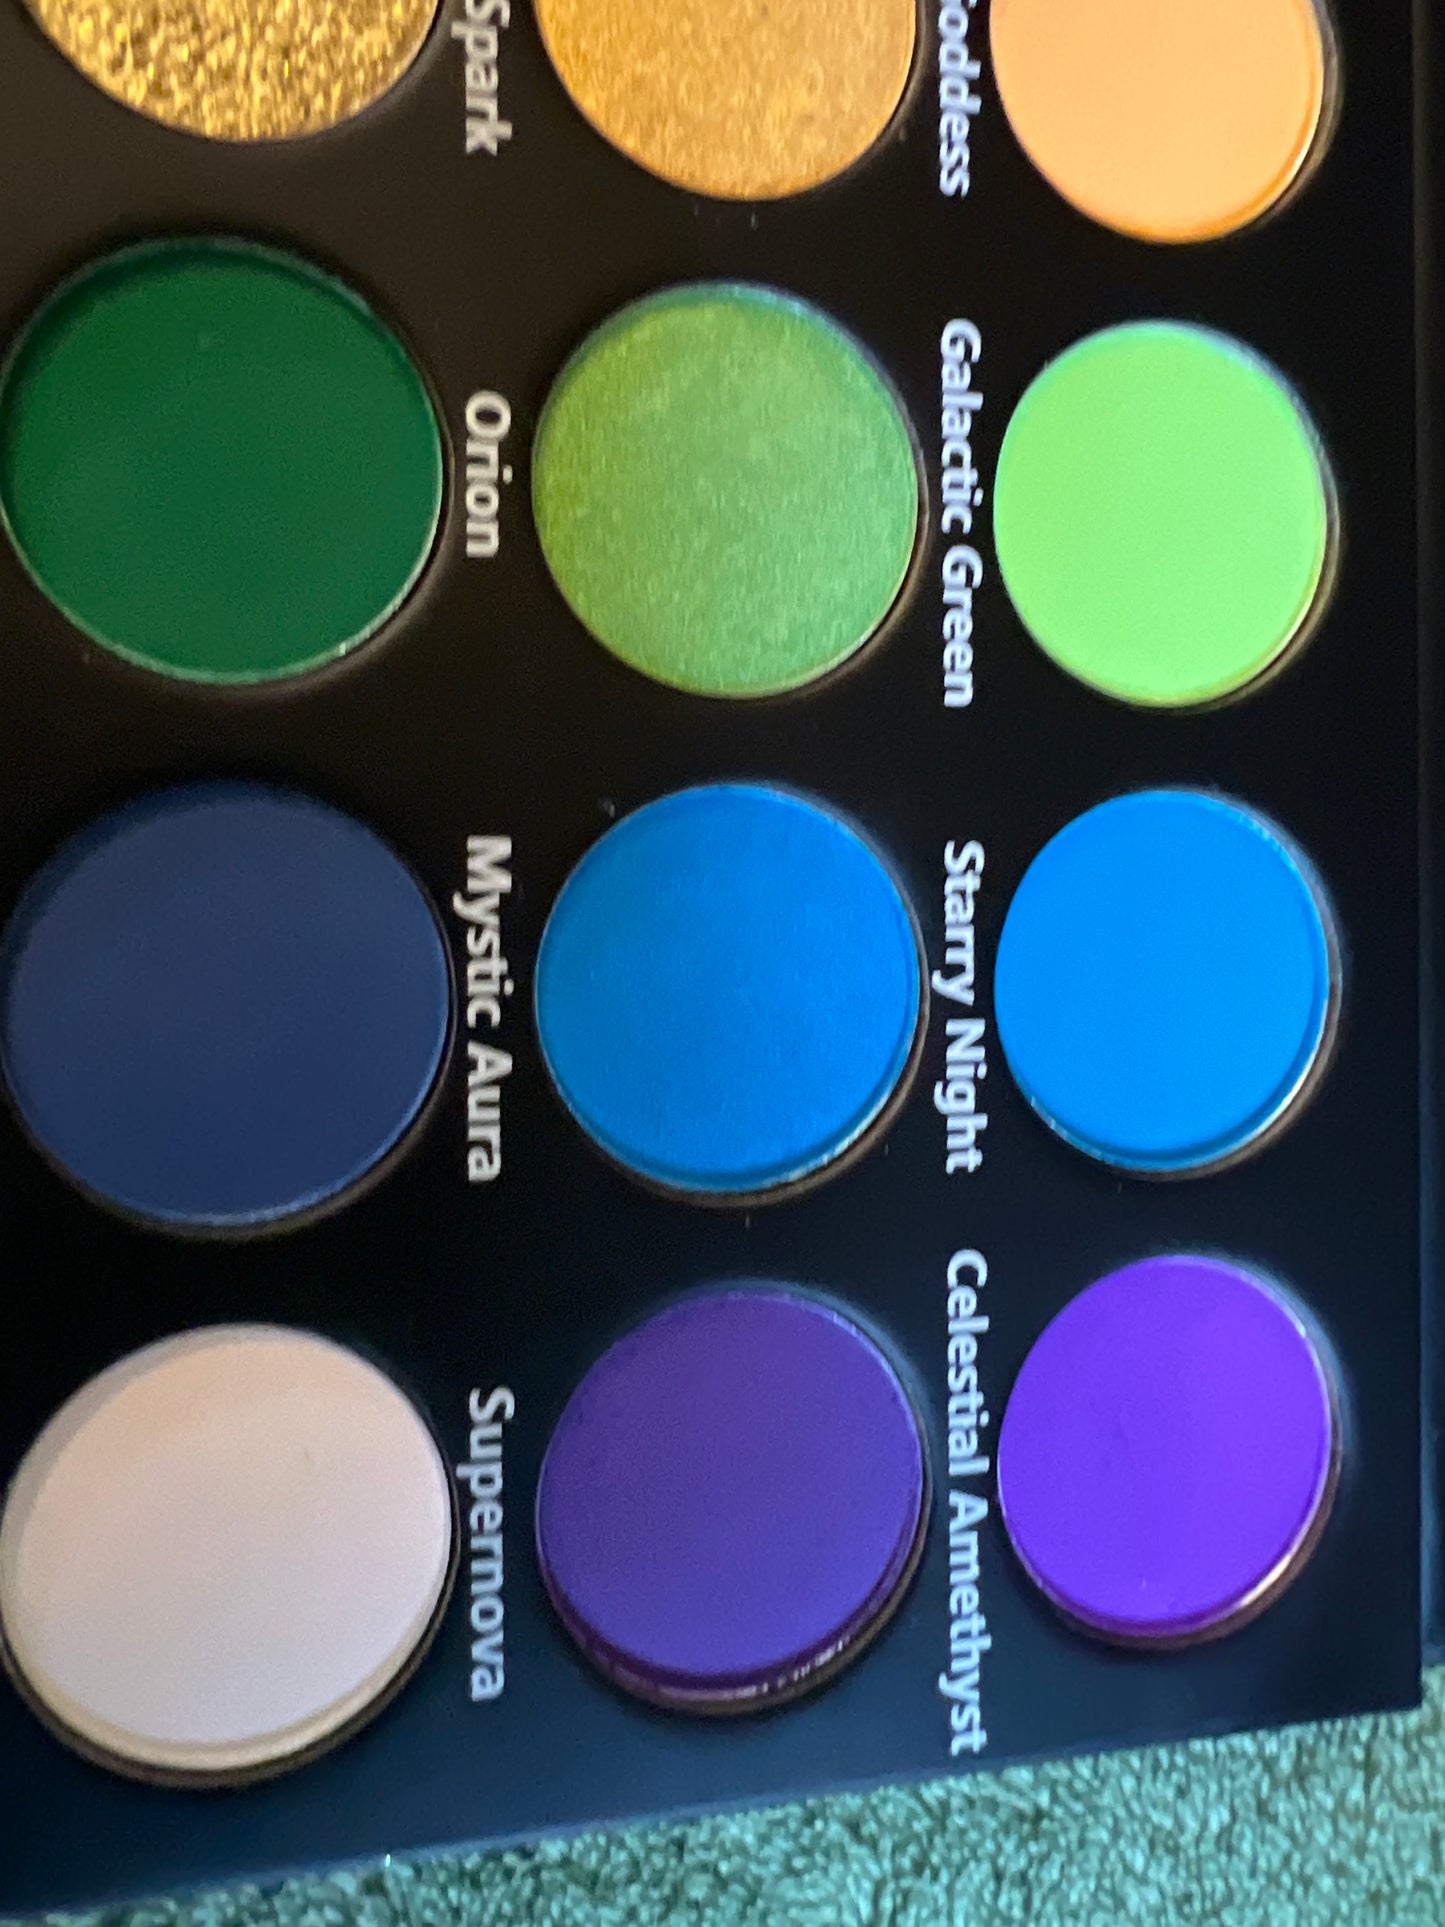 Cosmic Rainbow 🌙18 shade eyeshadow palette 🎨 2 UV reactive shades, matte, shimmer, duo chrome and metallic shades